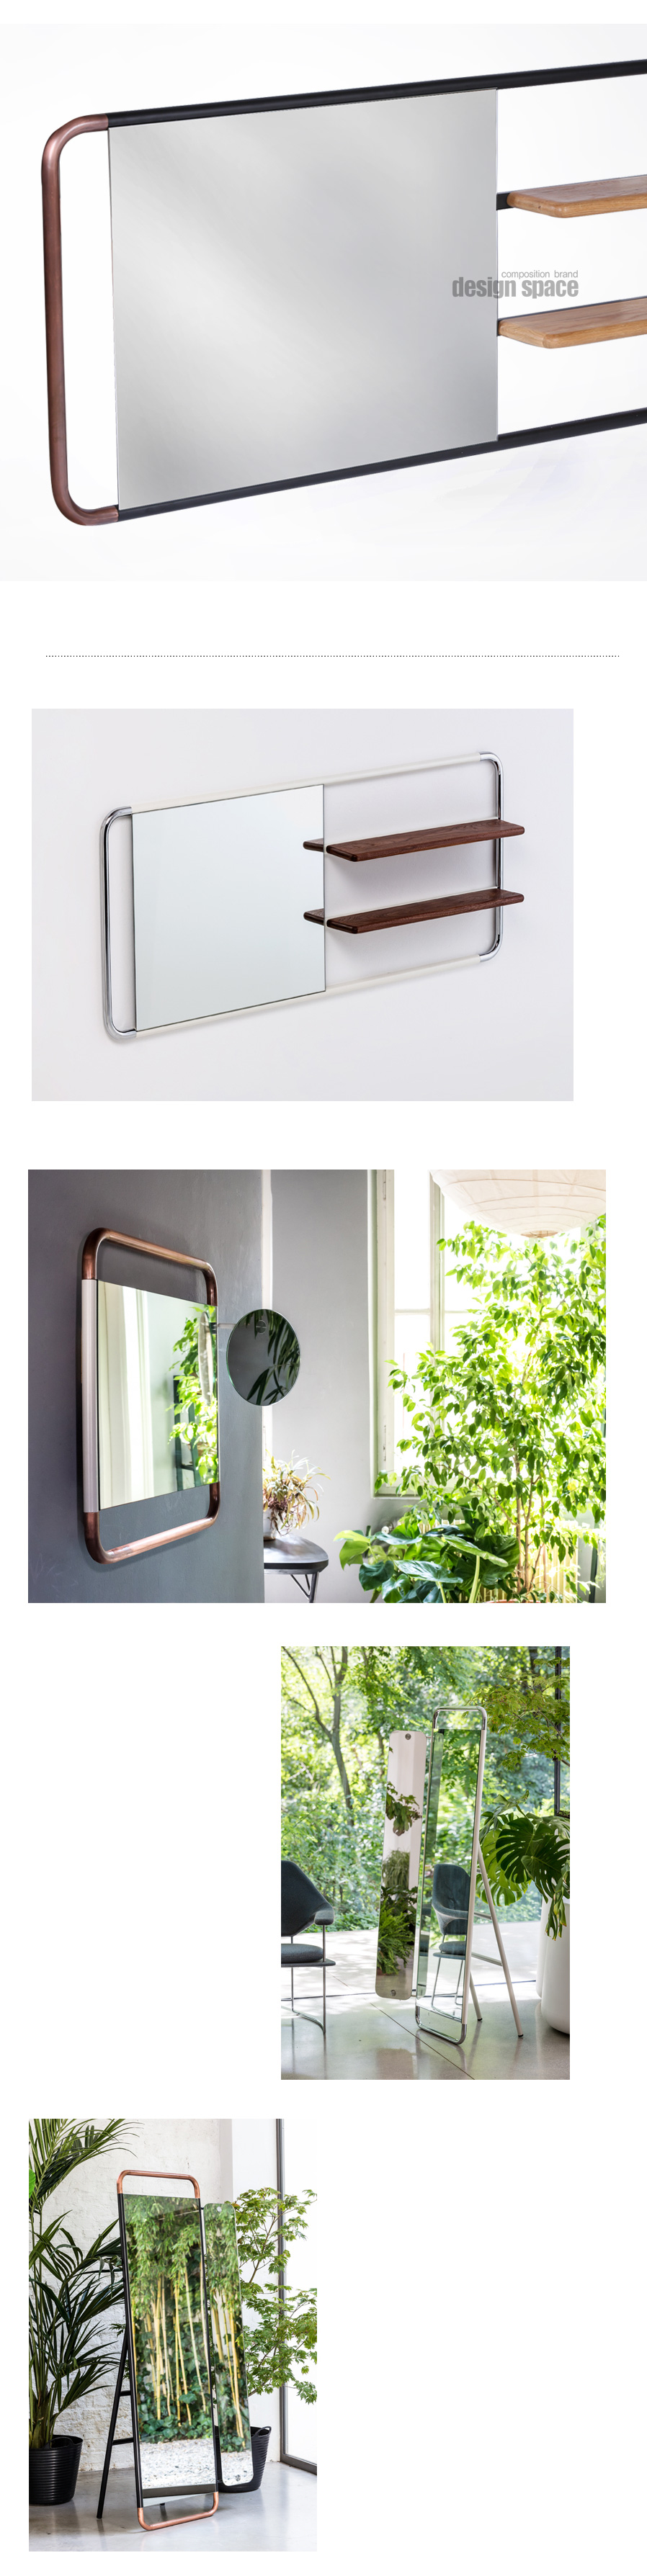 cantone-mirror-with-shelves_03.jpg